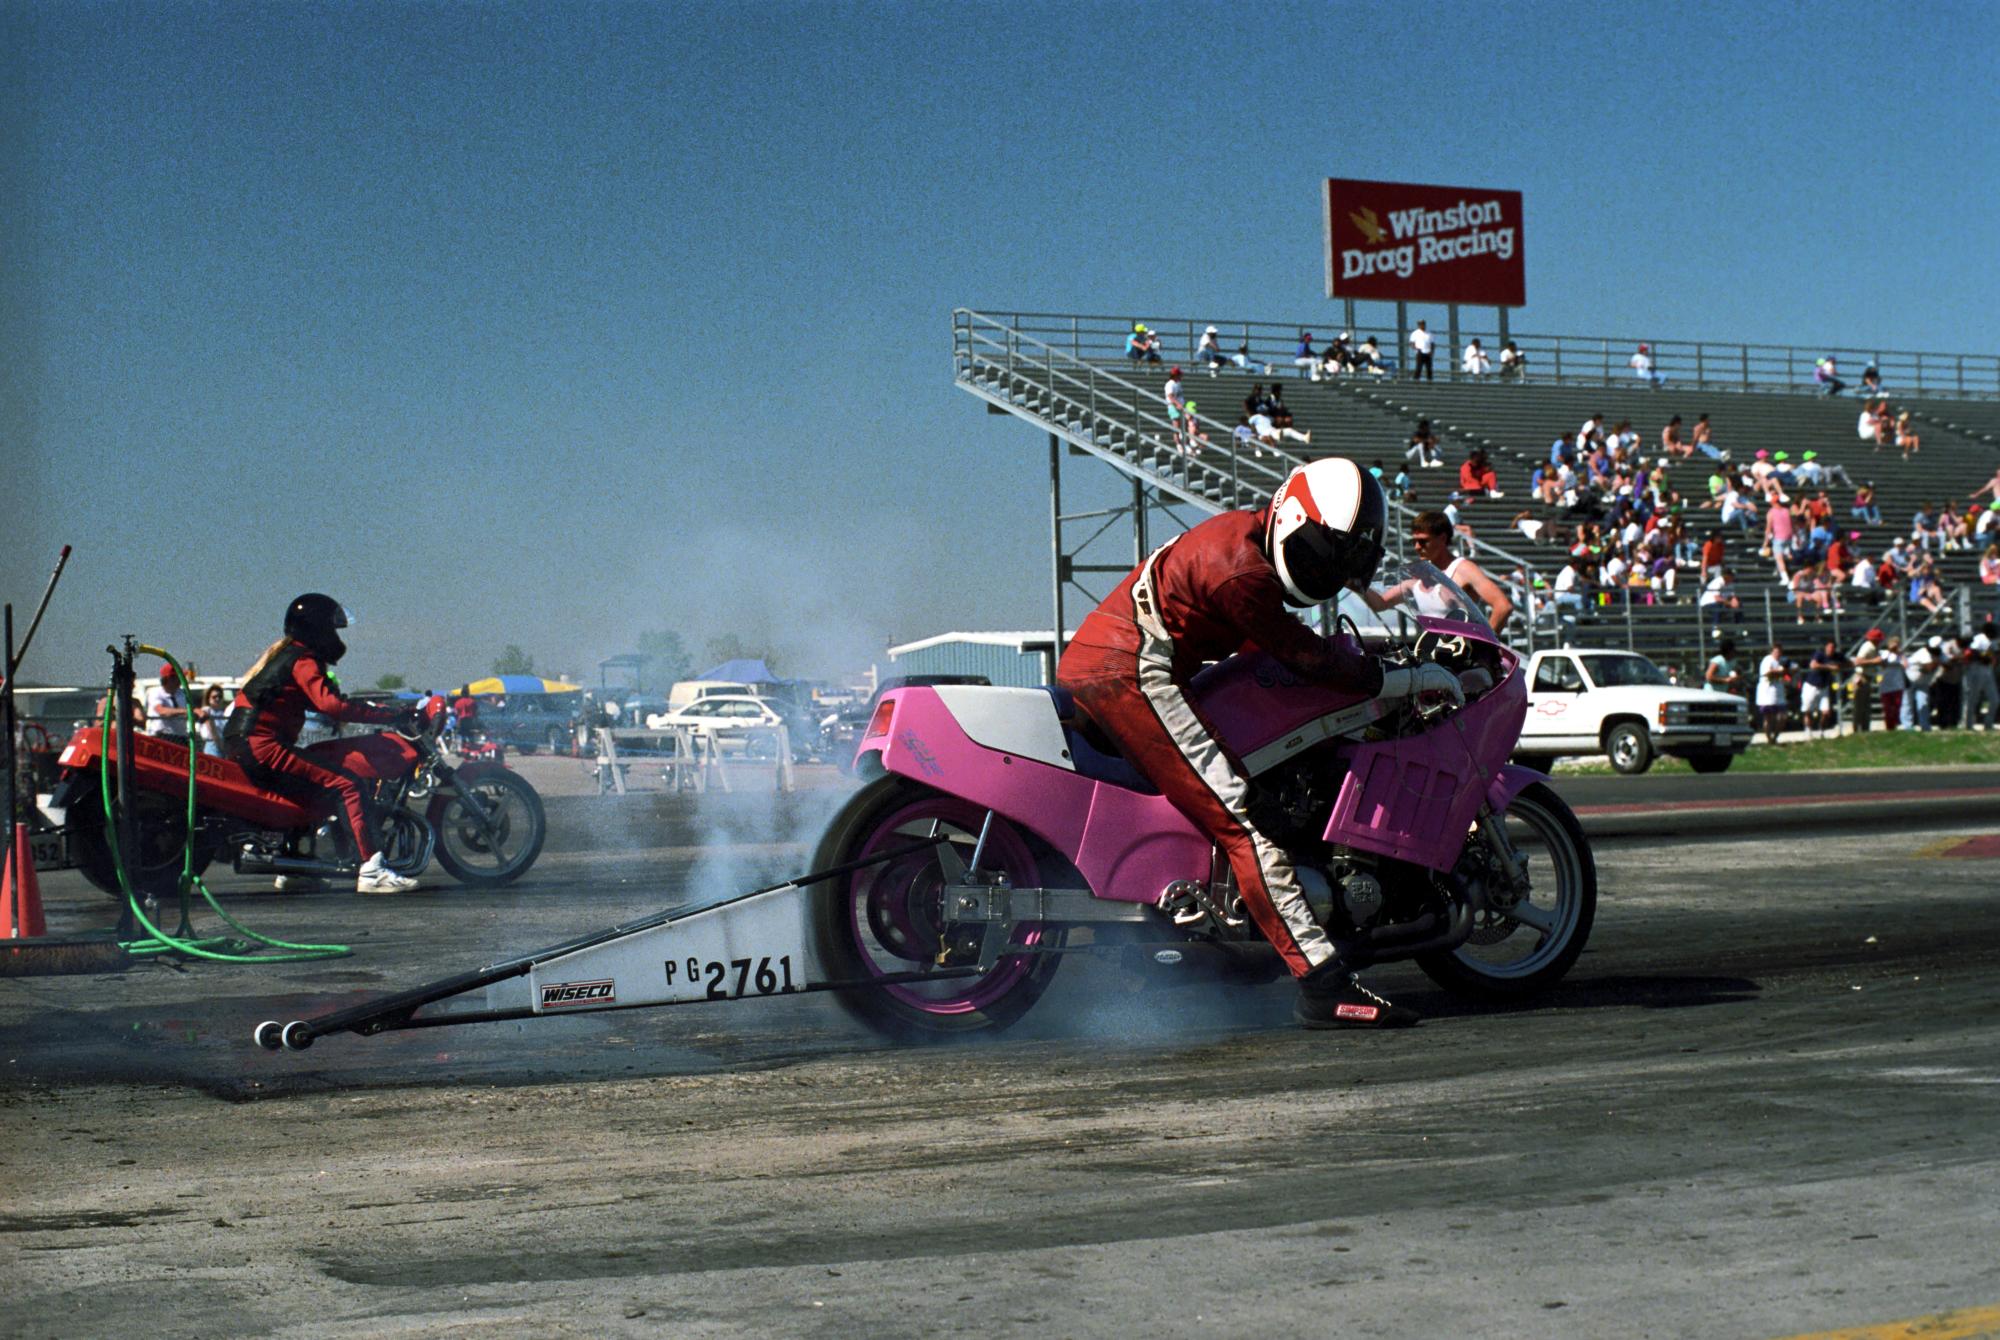 Texas Motor Drag Racing (1991) - Drag Racing Warm Up Start #2